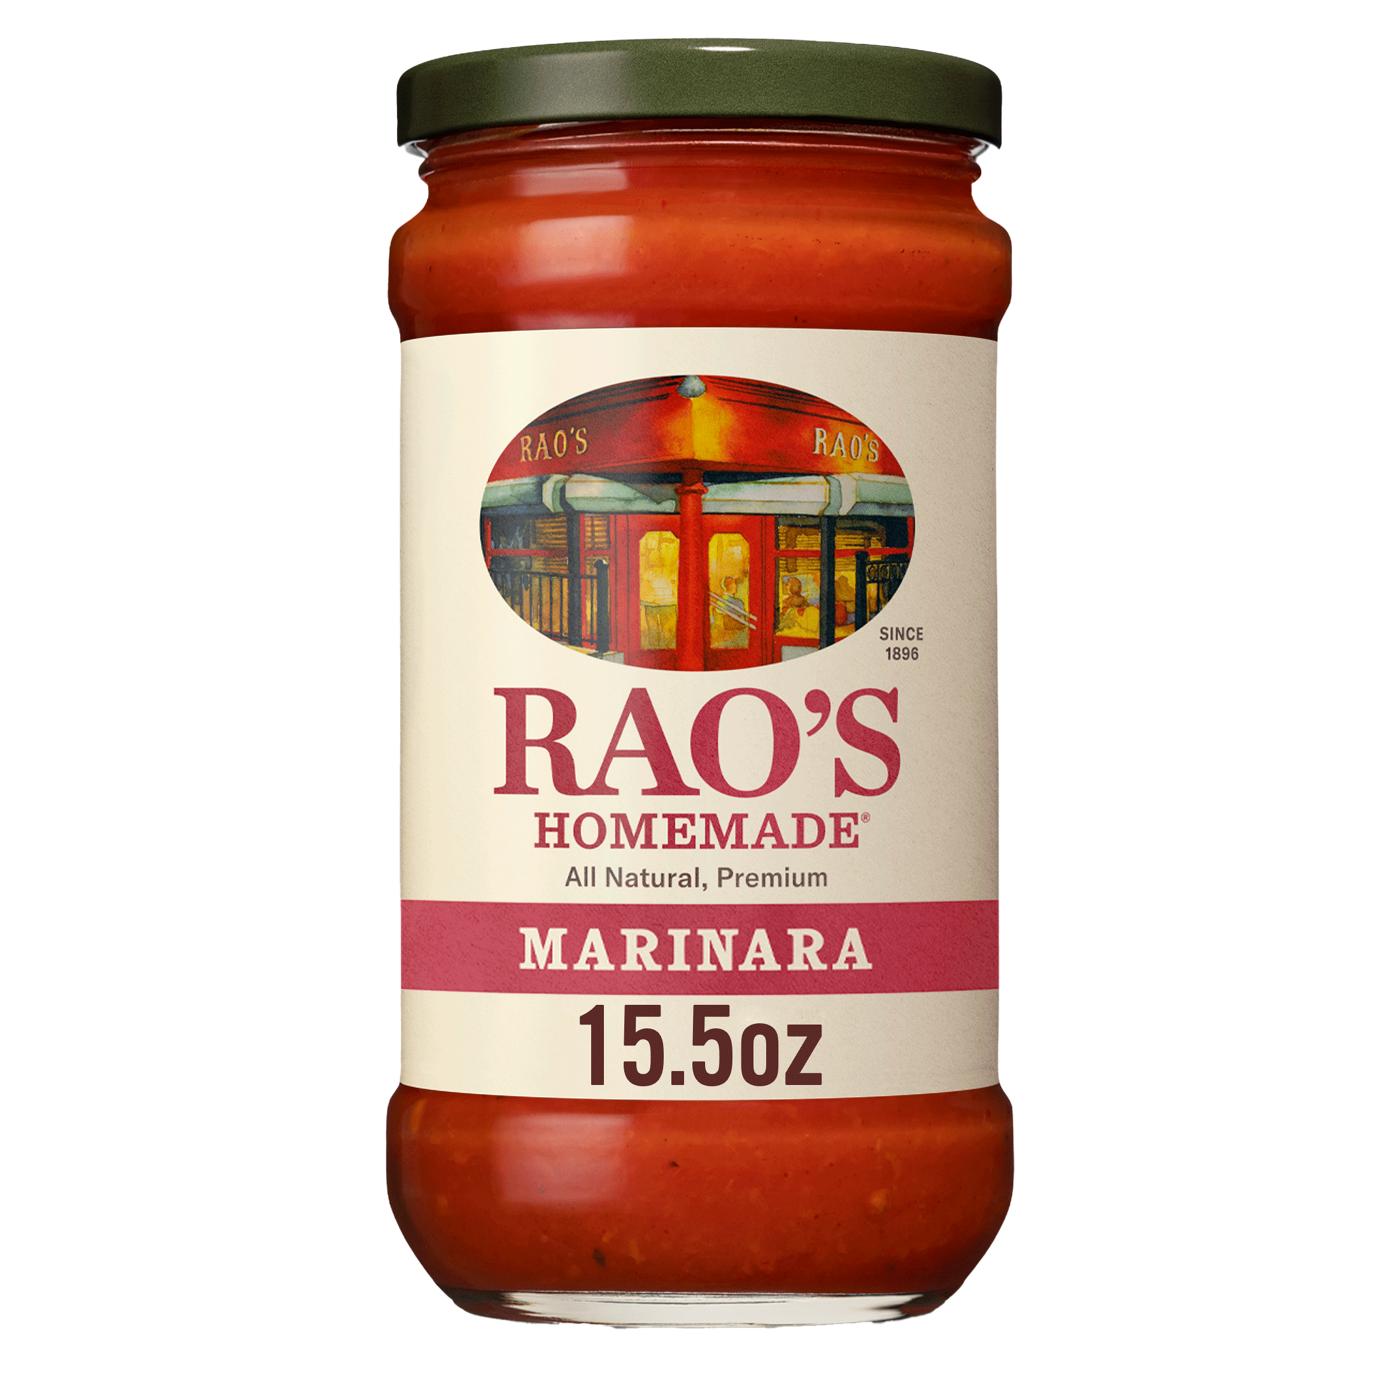 Rao's Homemade Marinara Tomato Sauce; image 1 of 5